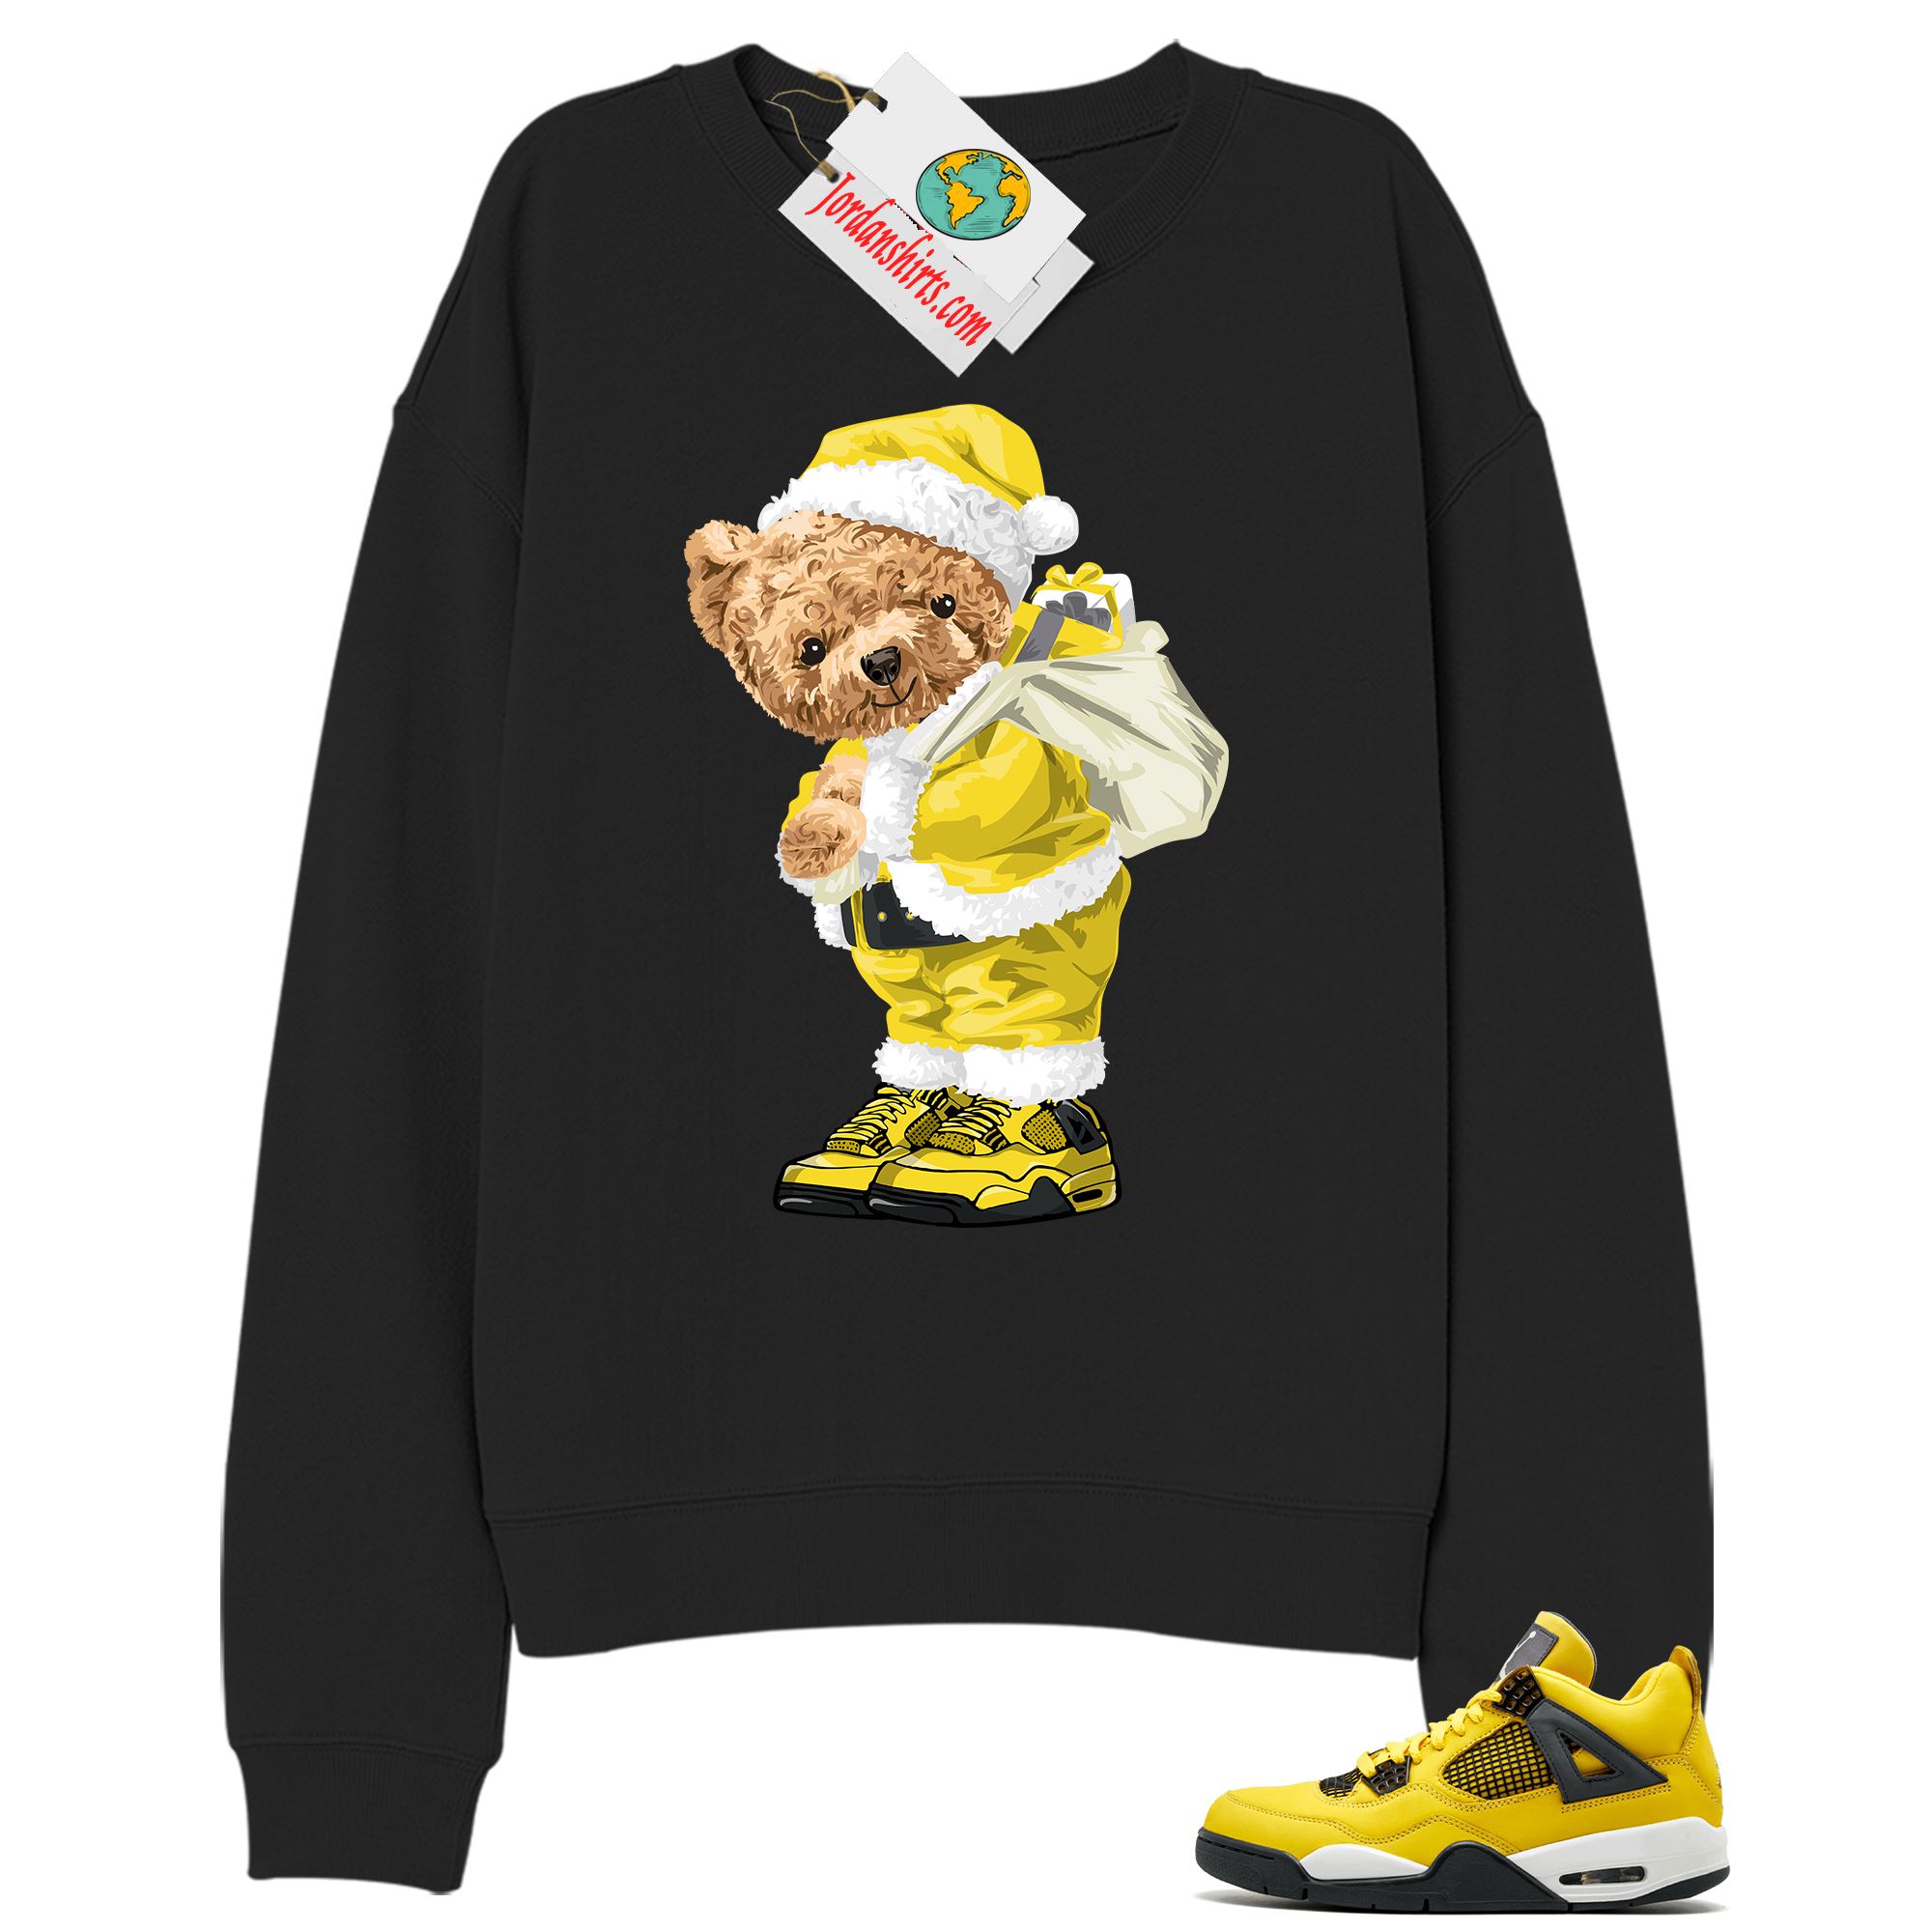 Jordan 4 Sweatshirt, Teddy Bear In Santa Claus Black Sweatshirt Air Jordan 4 Tour Yellow Lightning 4s-trungten-r0c9x Full Size Up To 5xl